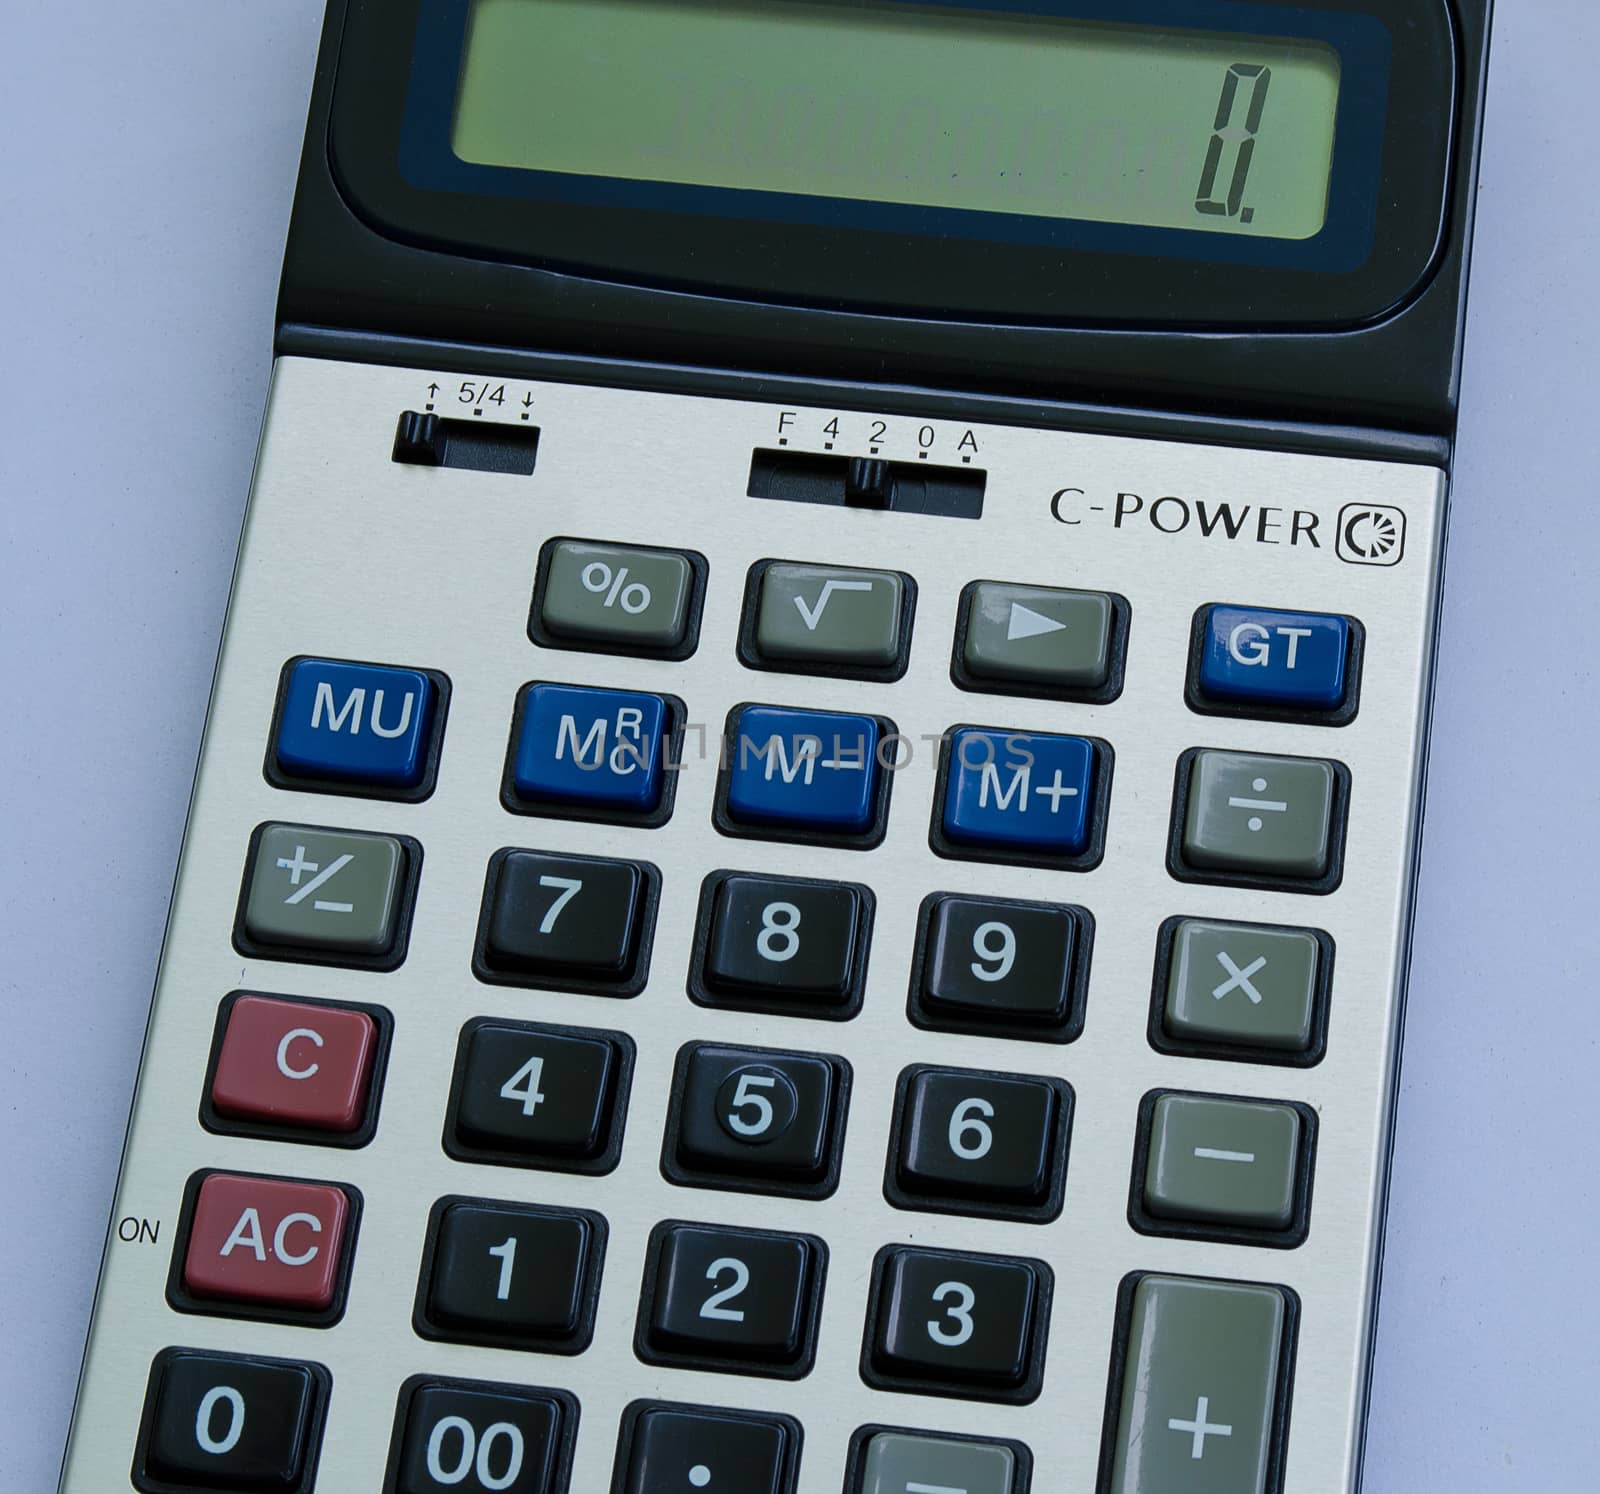 The calculating machine